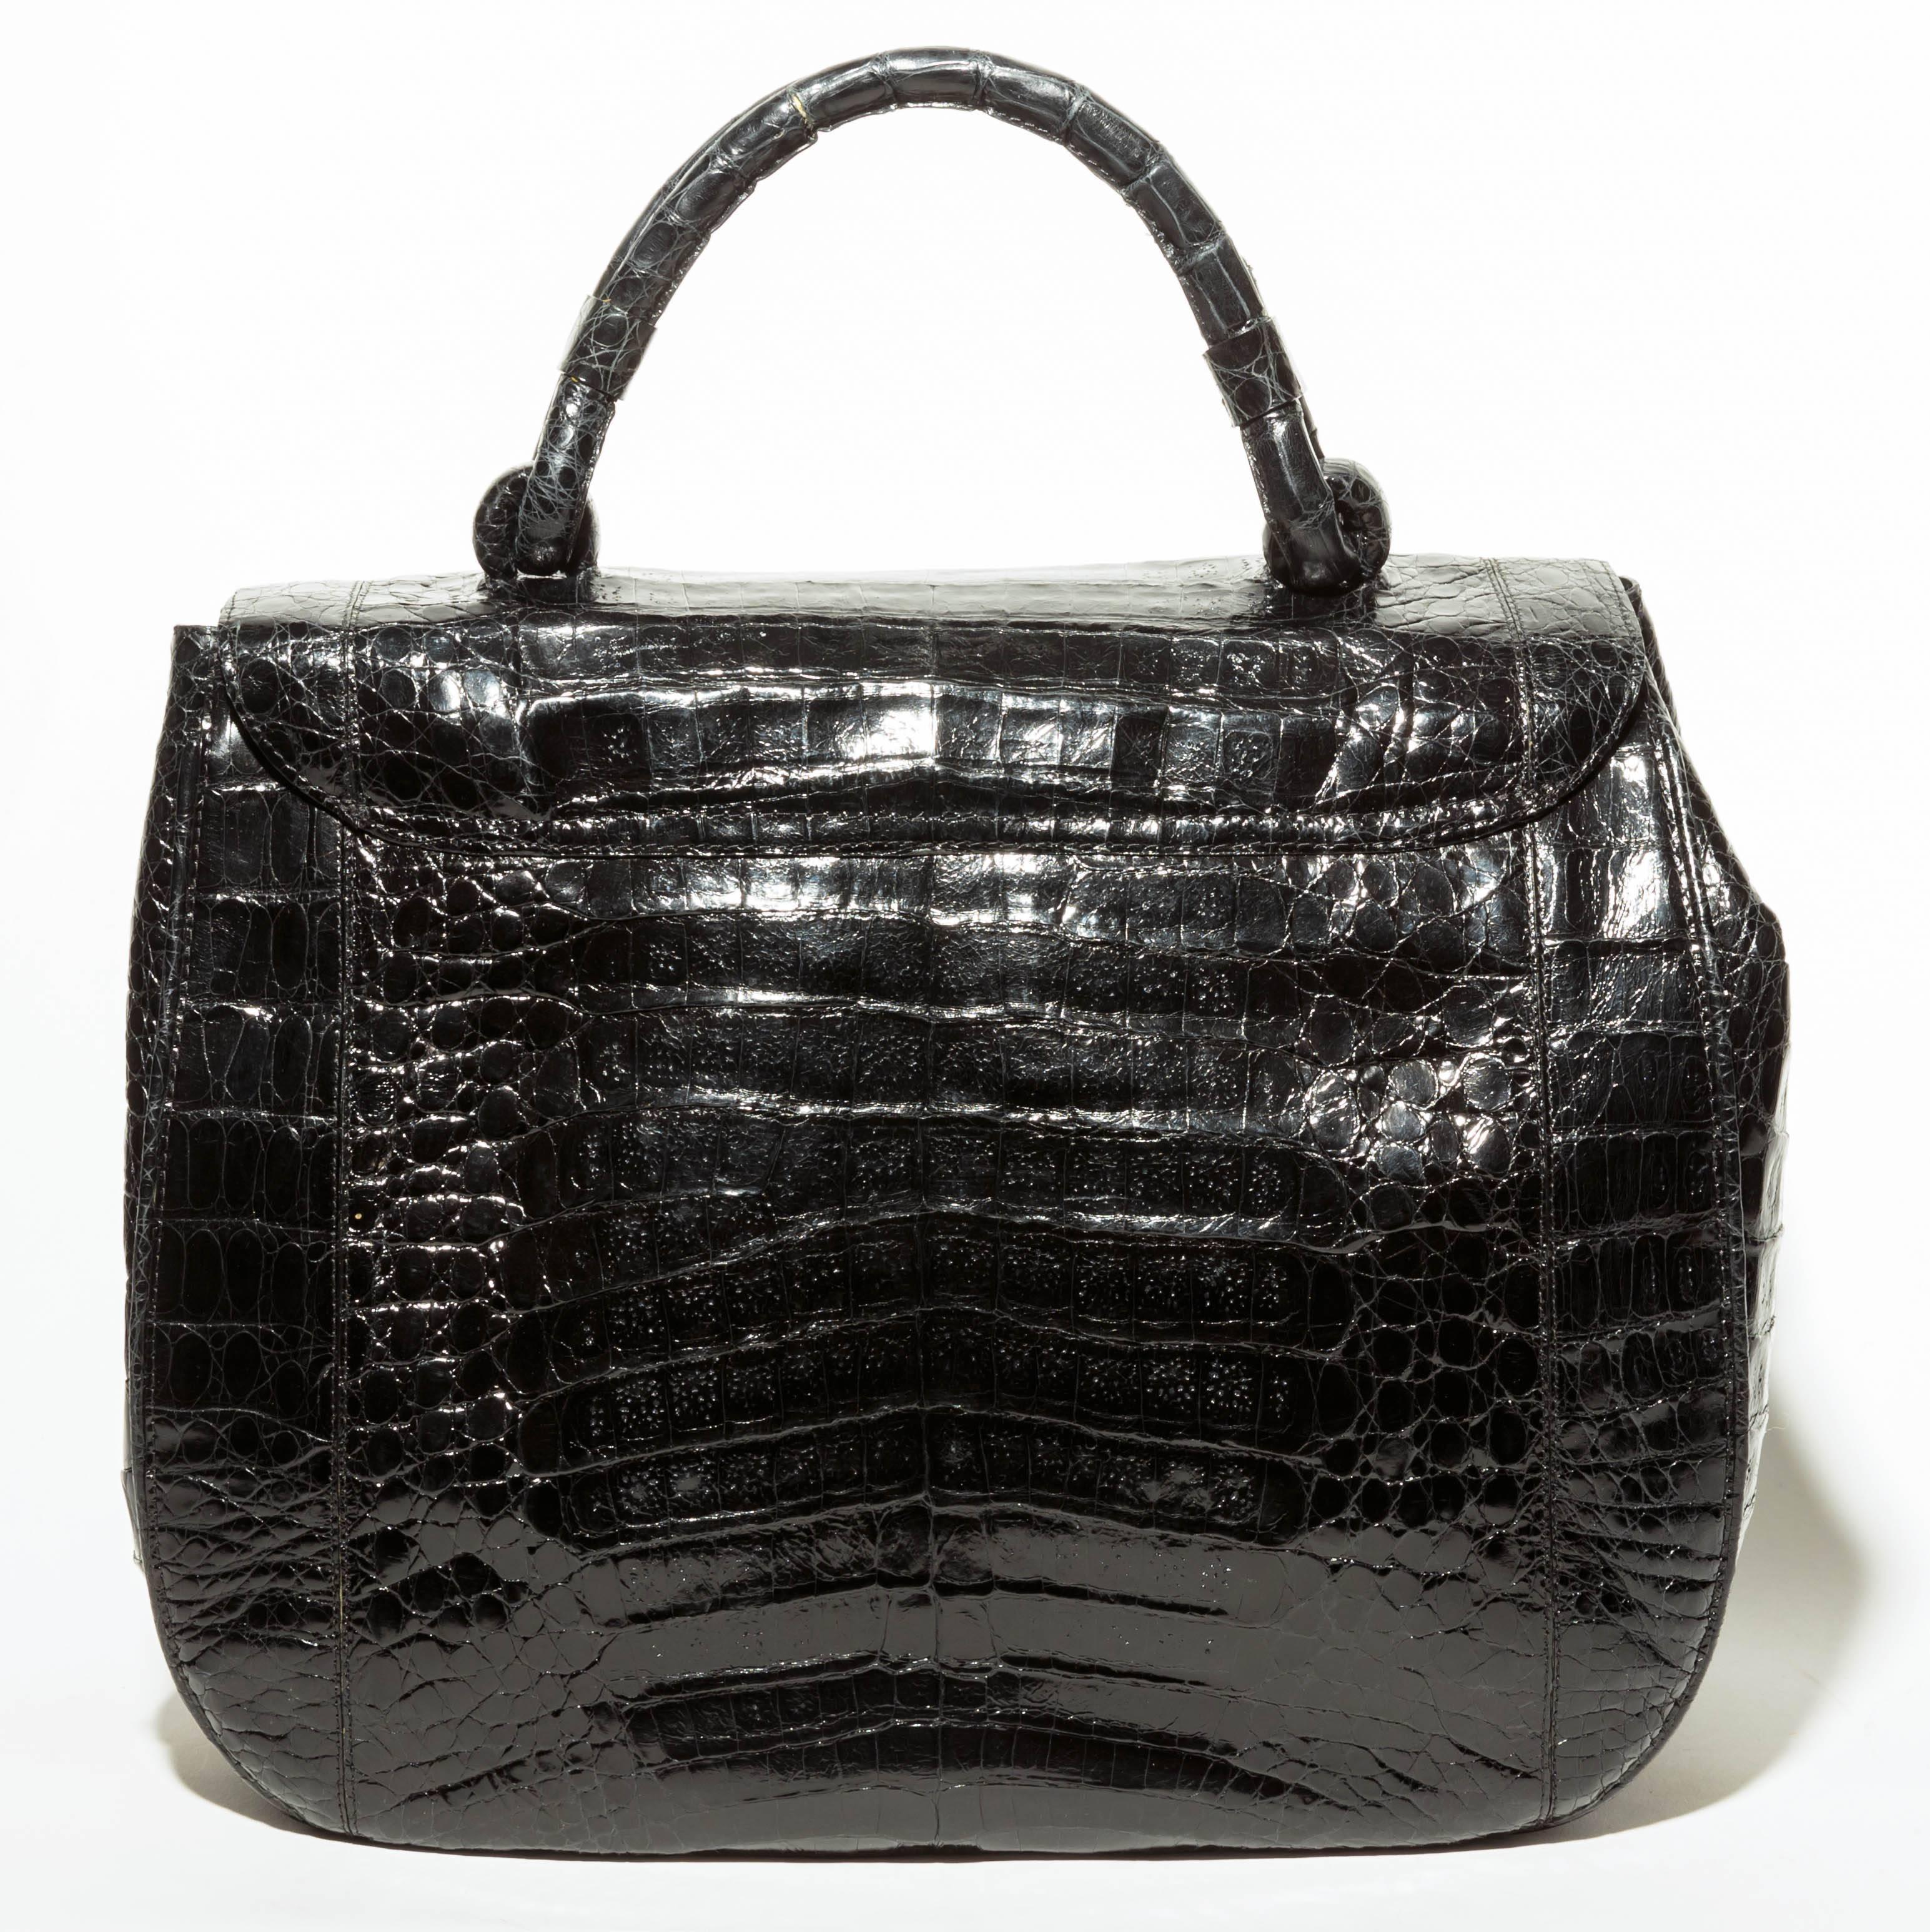 Beautiful Nancy Gonzalez Black Crocodile Top Handle Handbag
Condition is excellent.
Top handle measures 11 inches with a drop of 4 inches.